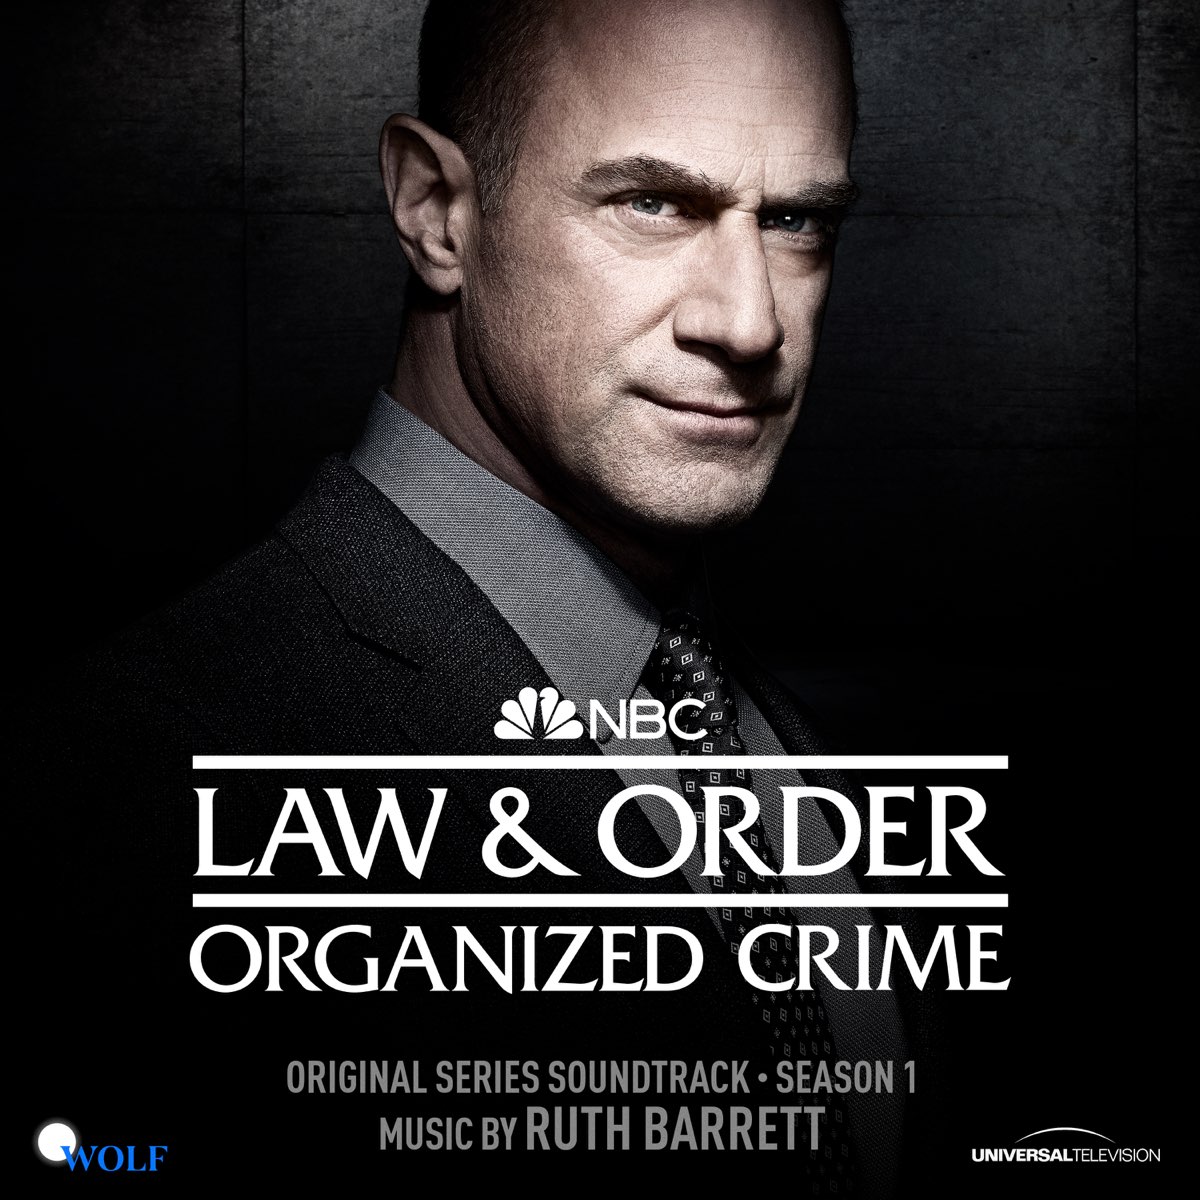 Law & Order: Organized Crime, Season 1 (Original Series Soundtrack) - Album  by Ruth Barrett - Apple Music